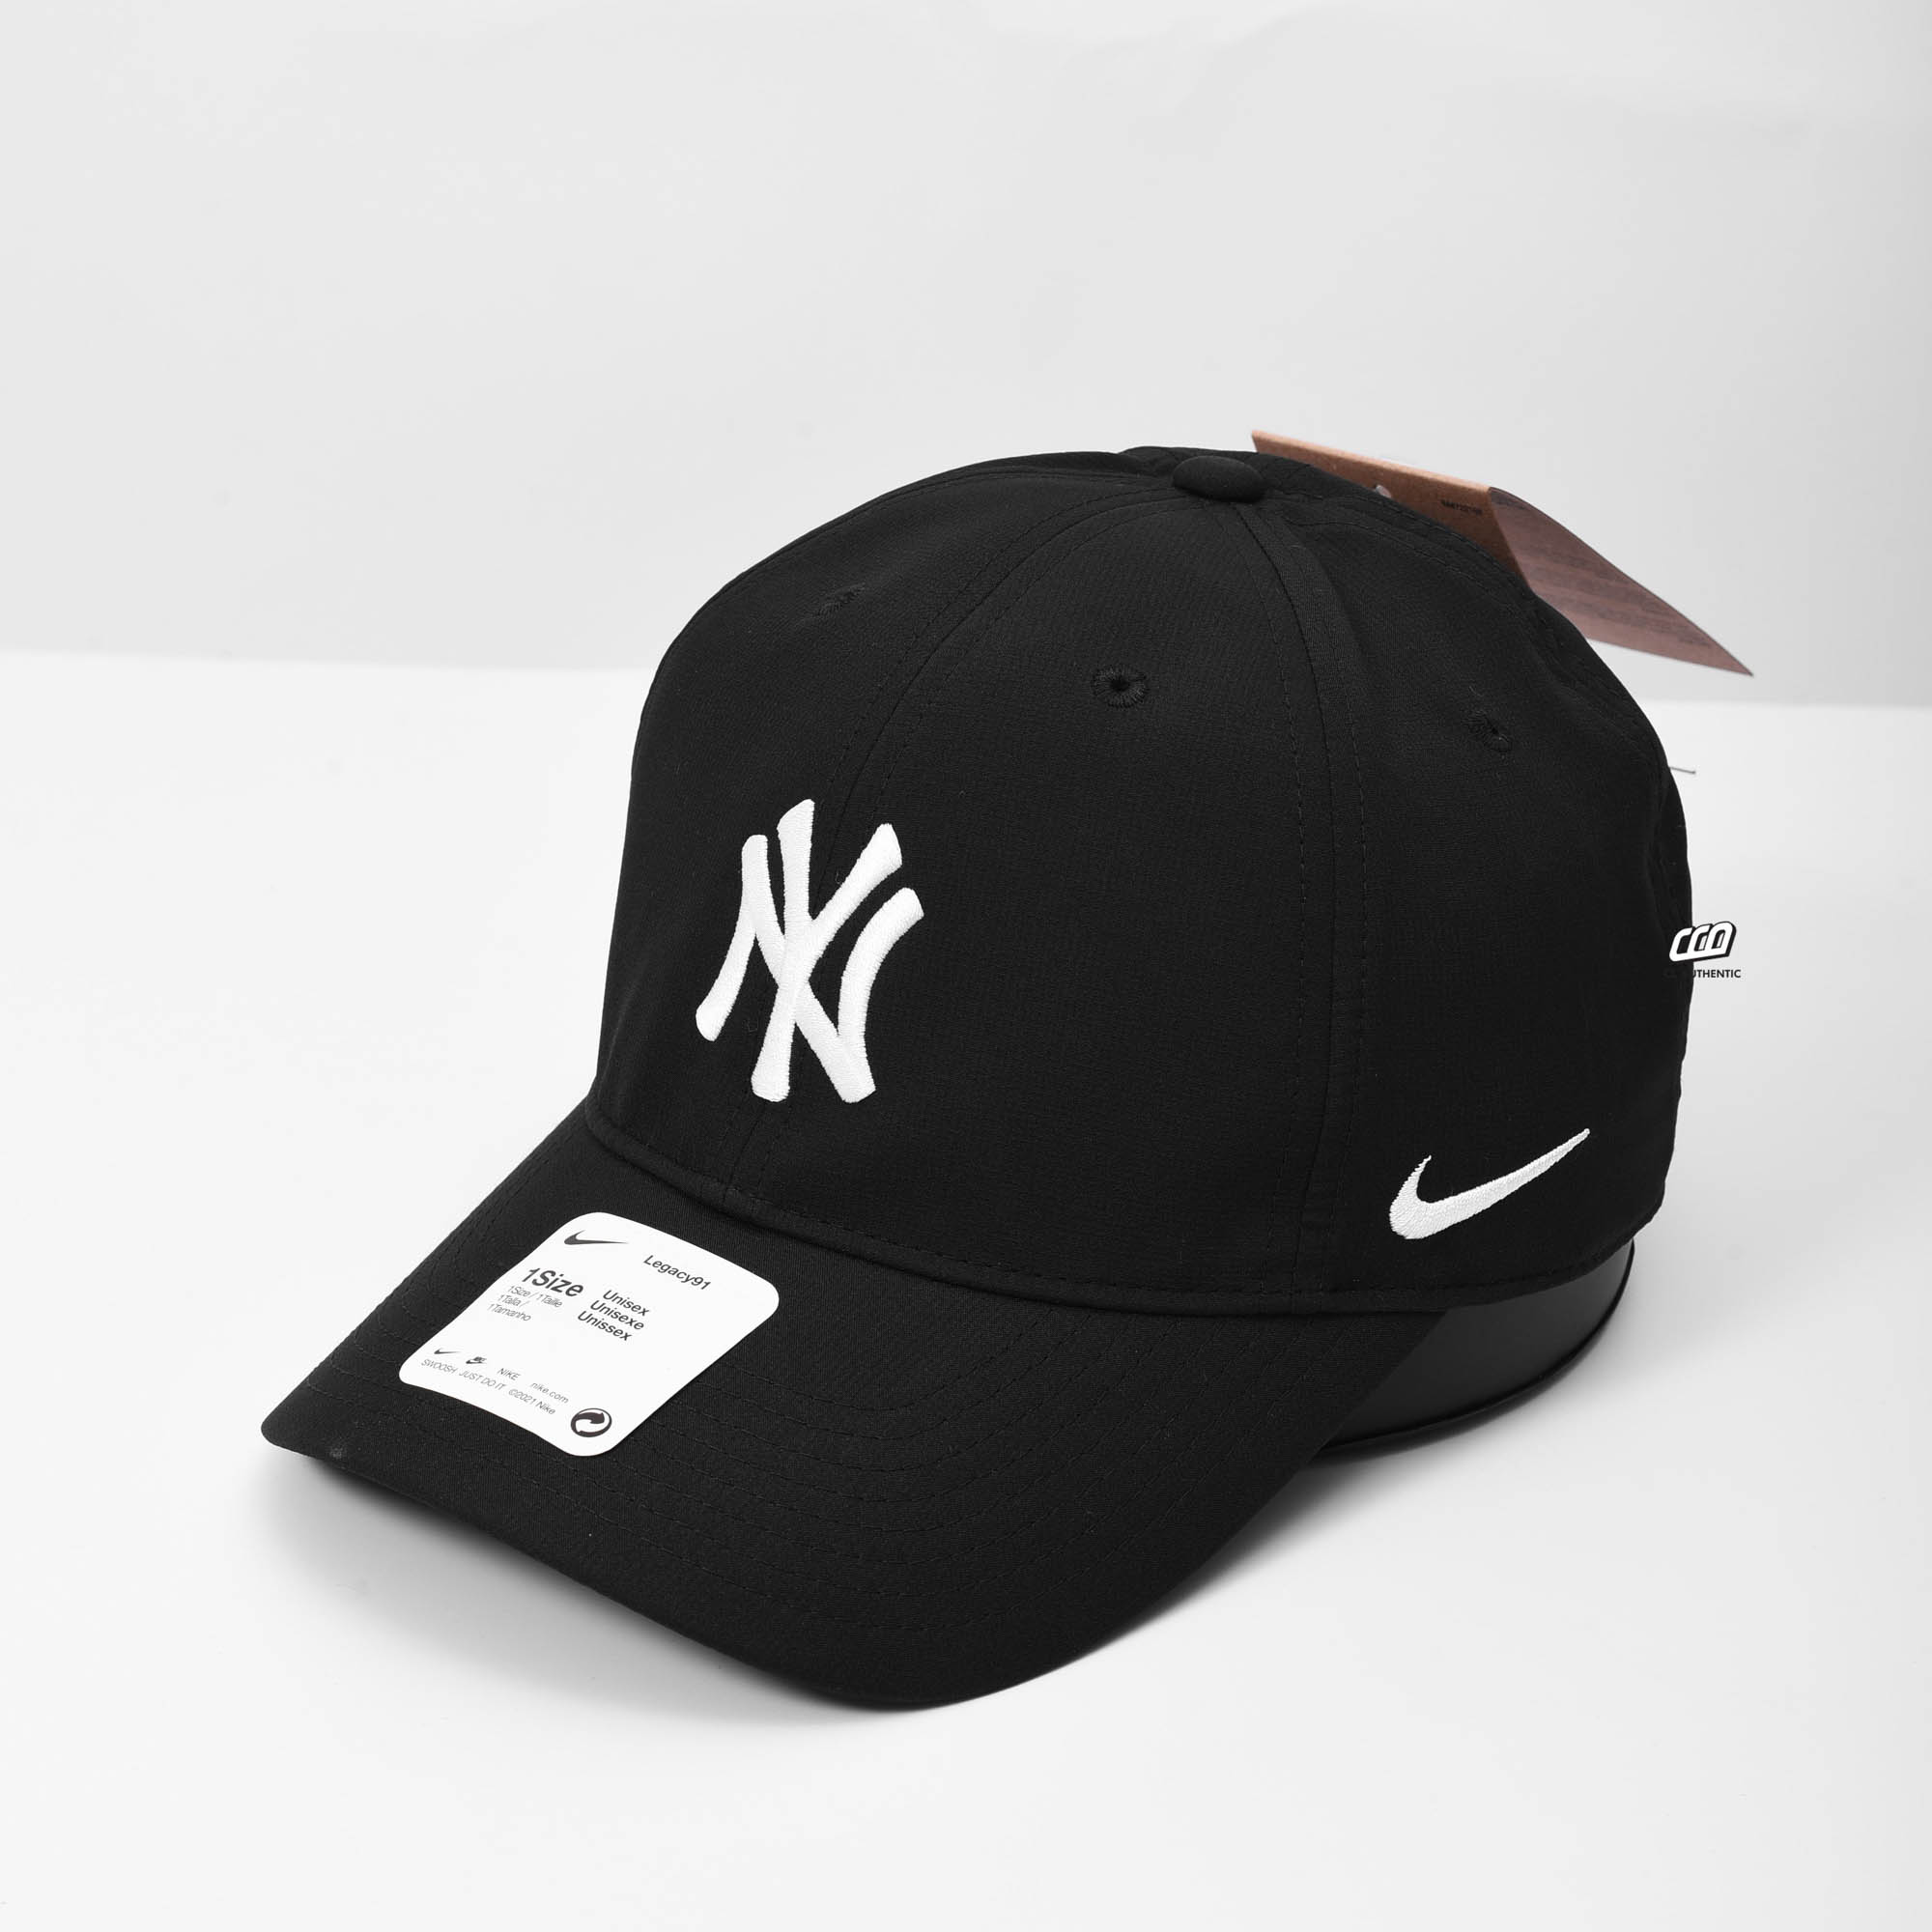 NIKE X MLB CAP - BLACK